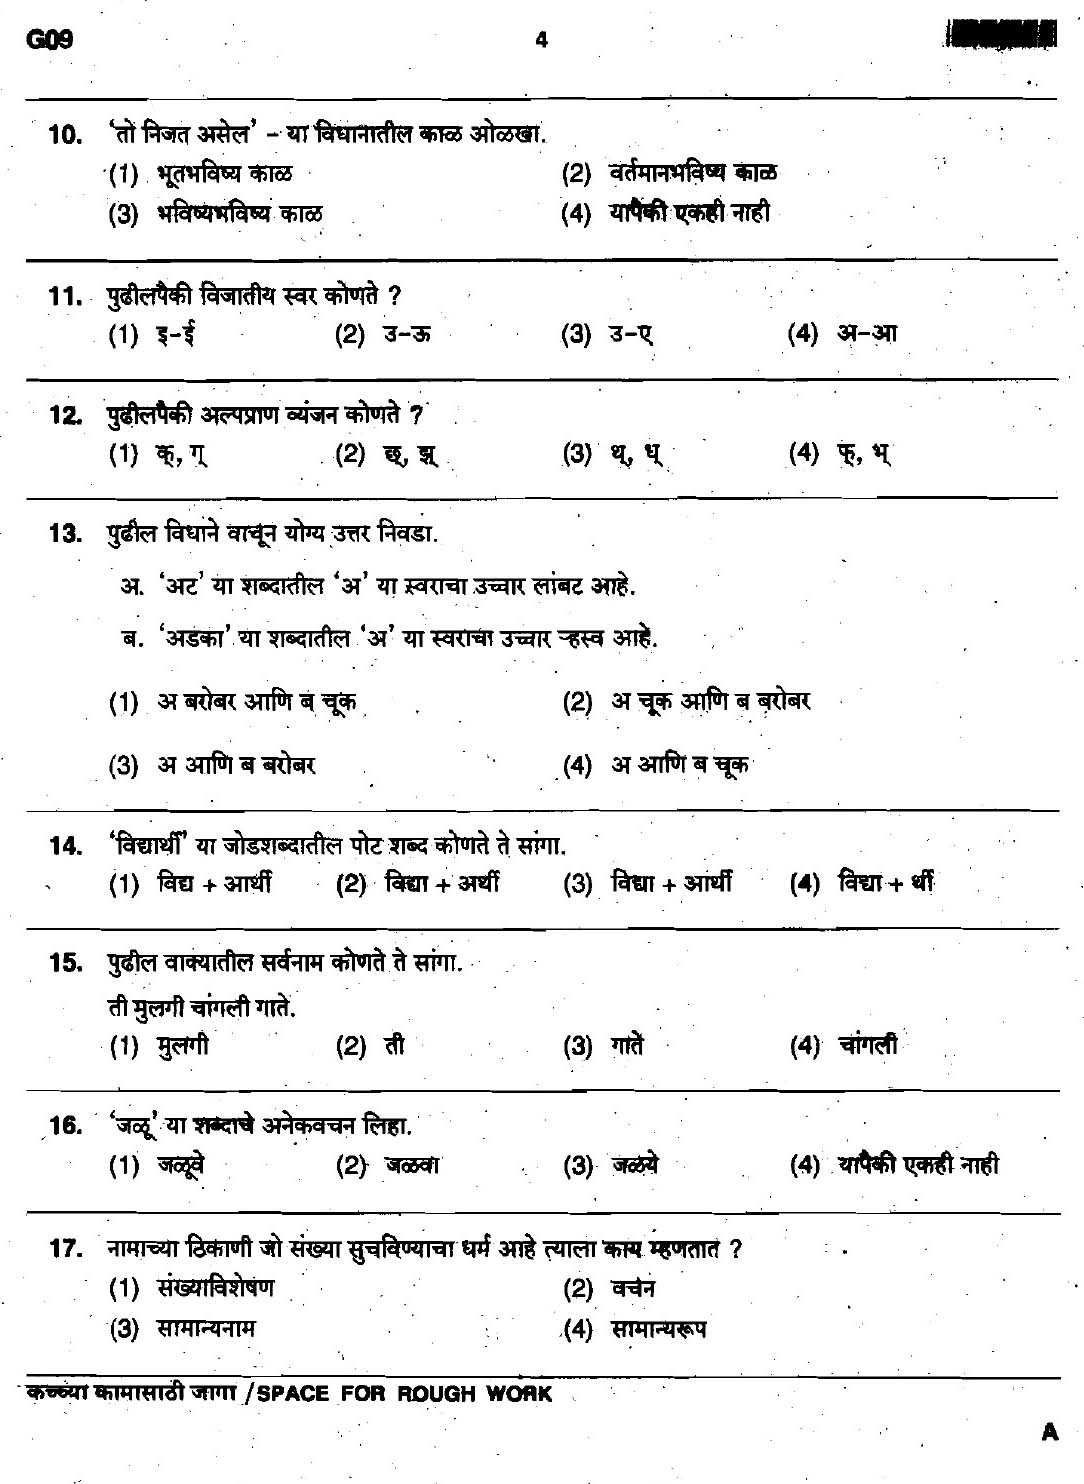 Maharashtra PSC Clerk Typist Preliminary Exam Question Paper 2017 3